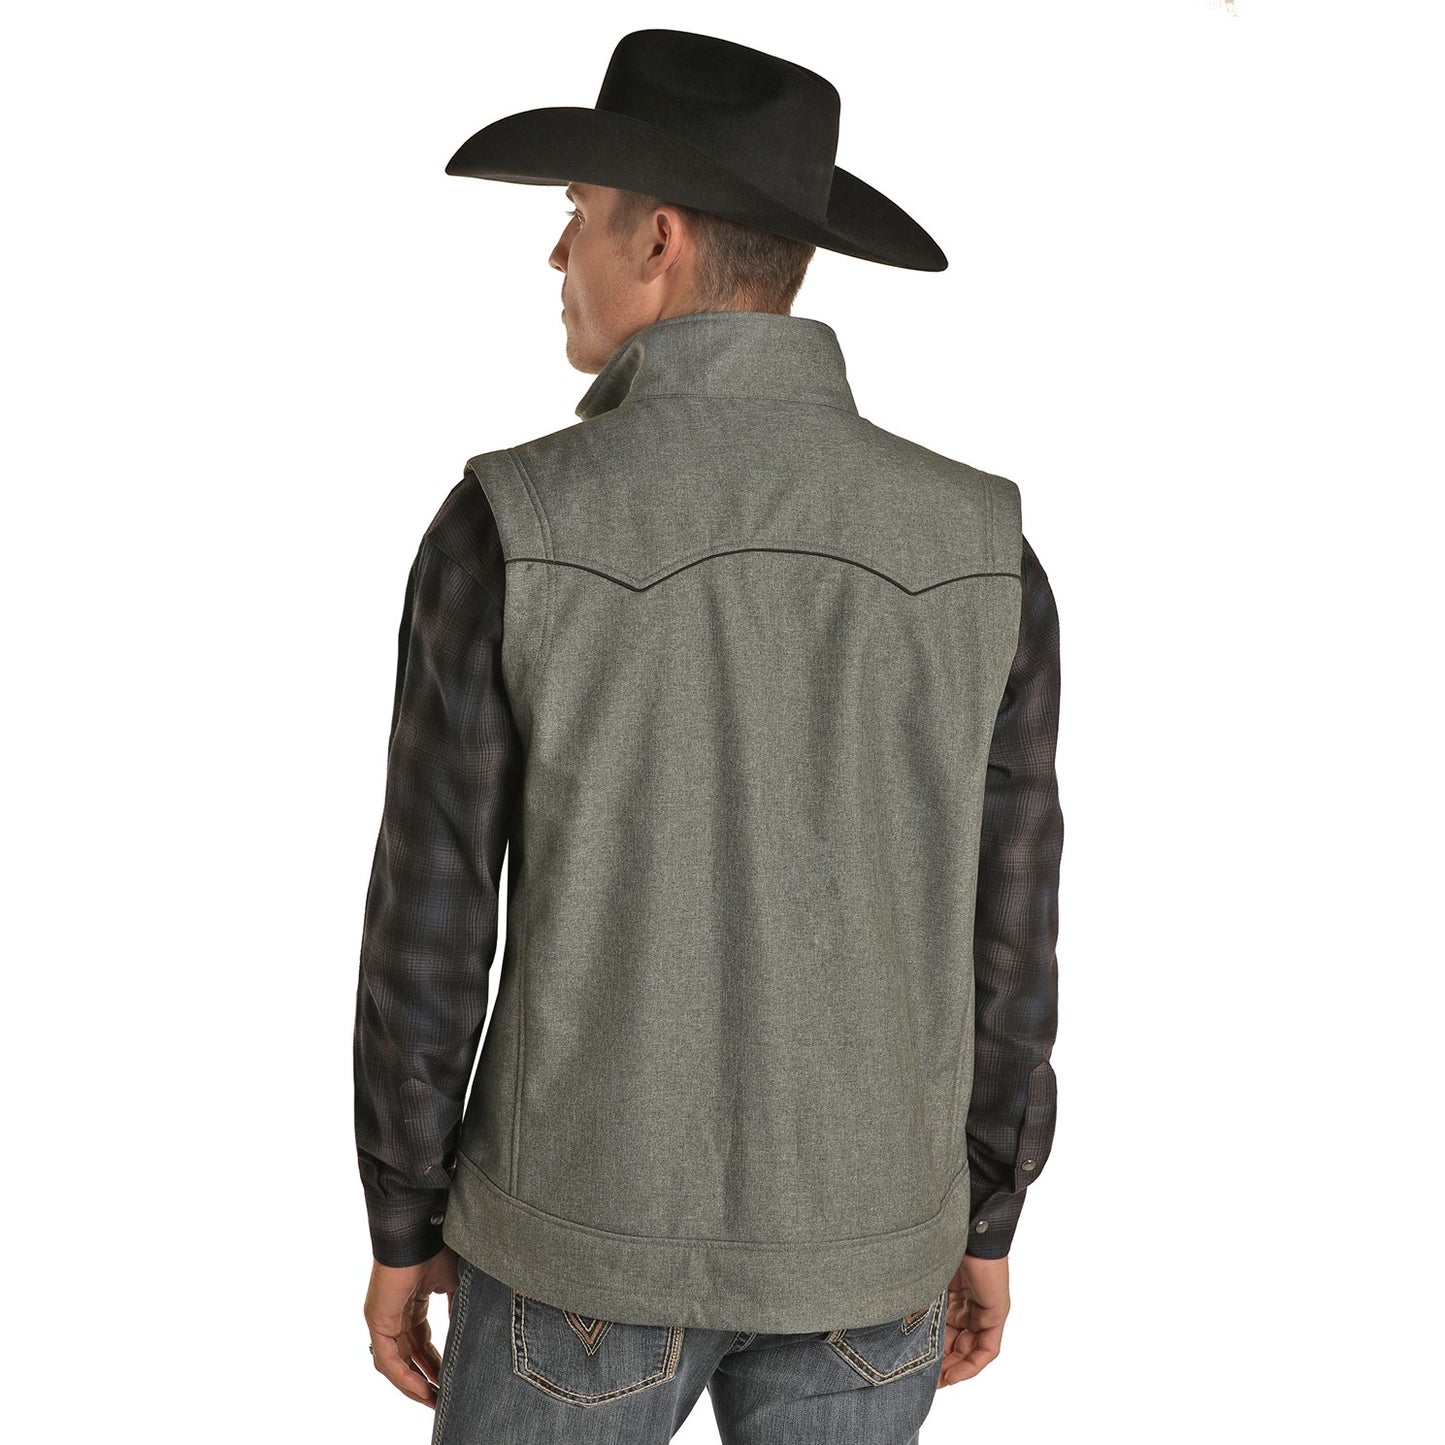 Powder River Outfitters Men's Melange Rodeo Charcoal Vest 98-1061-02